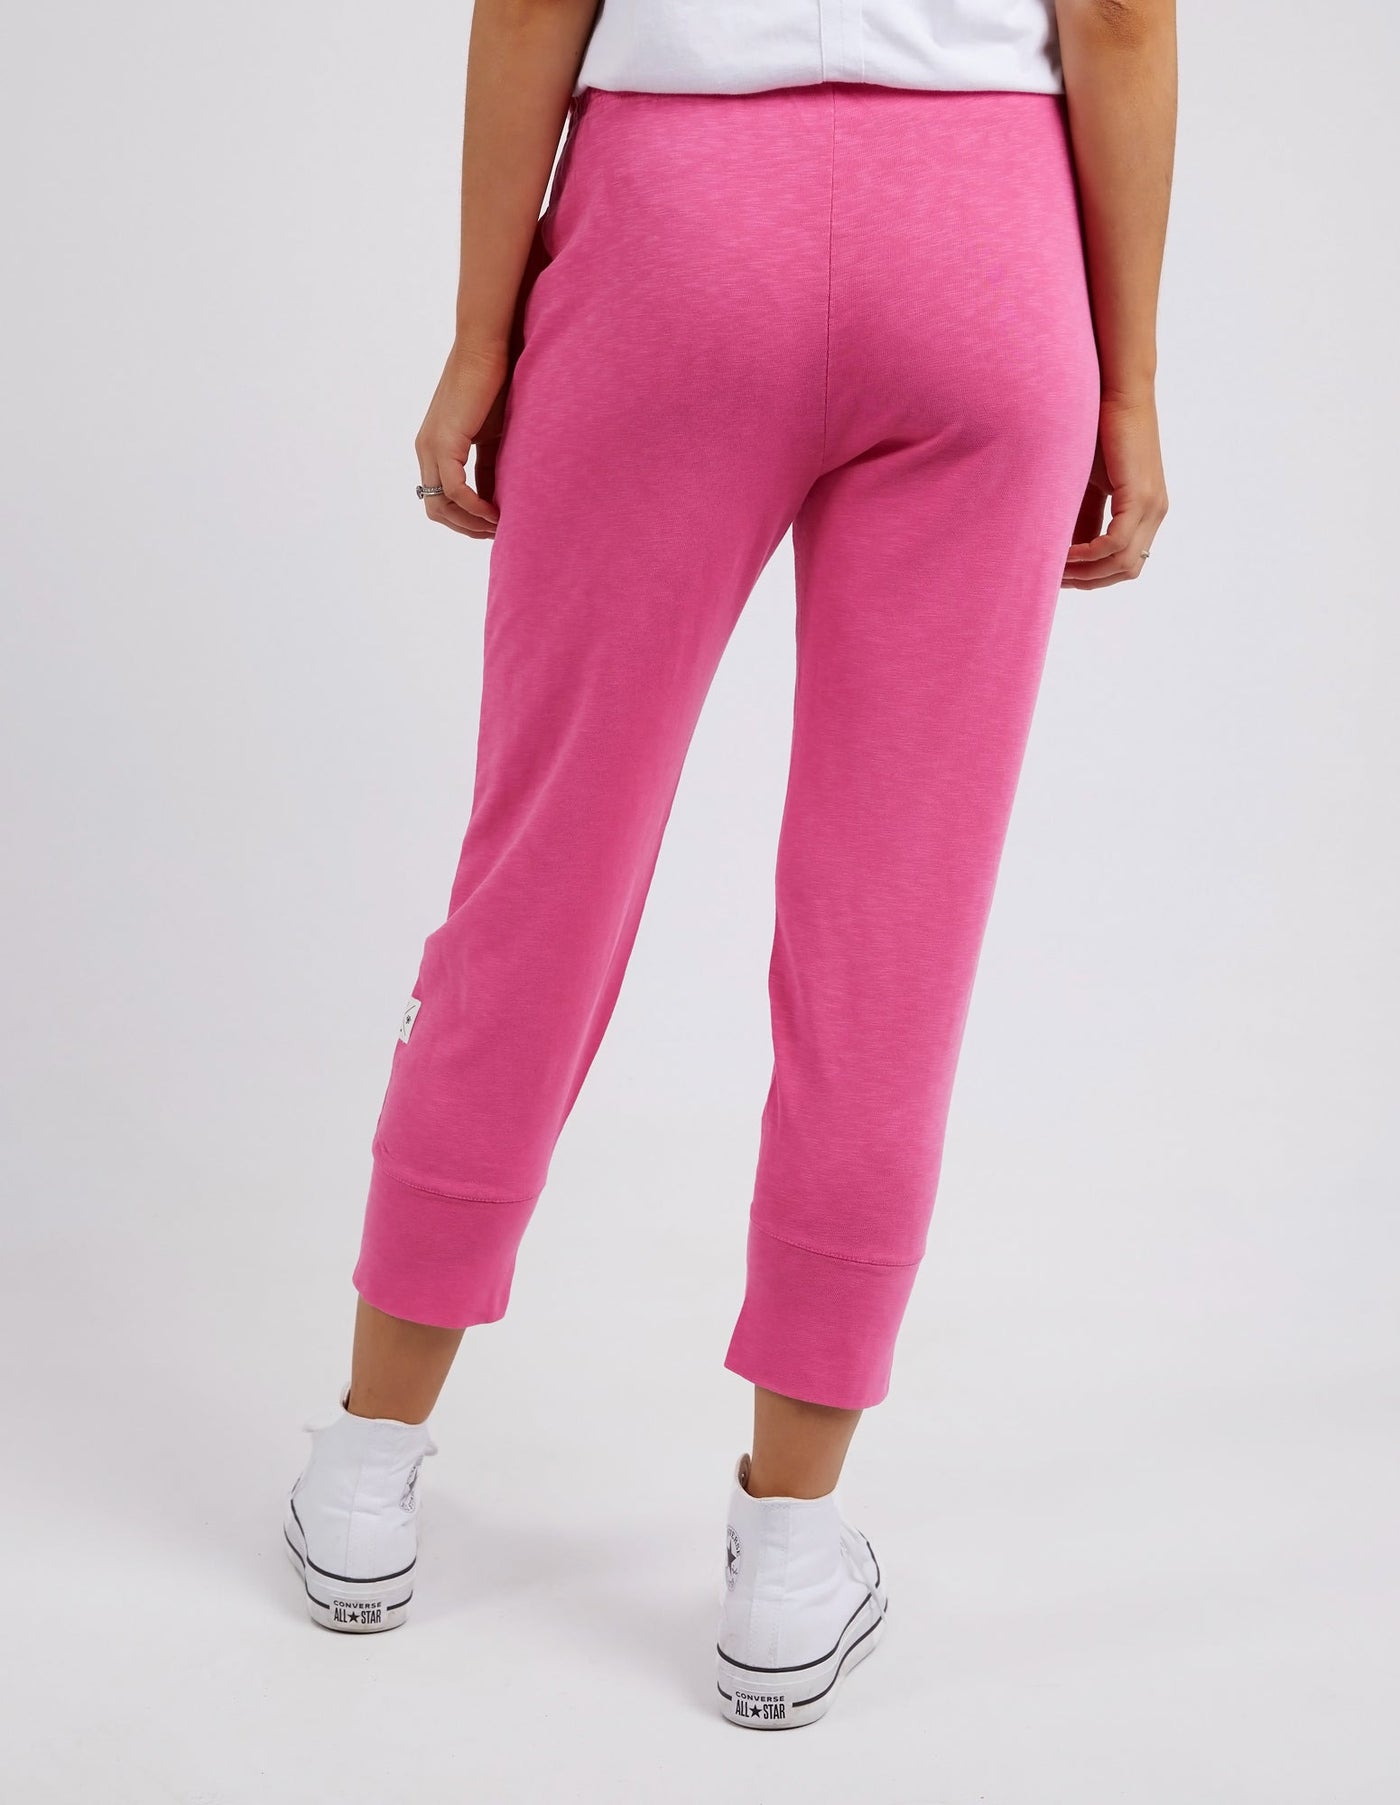 Brunch Pant - Shocking Pink-Elm Lifestyle-Lima & Co